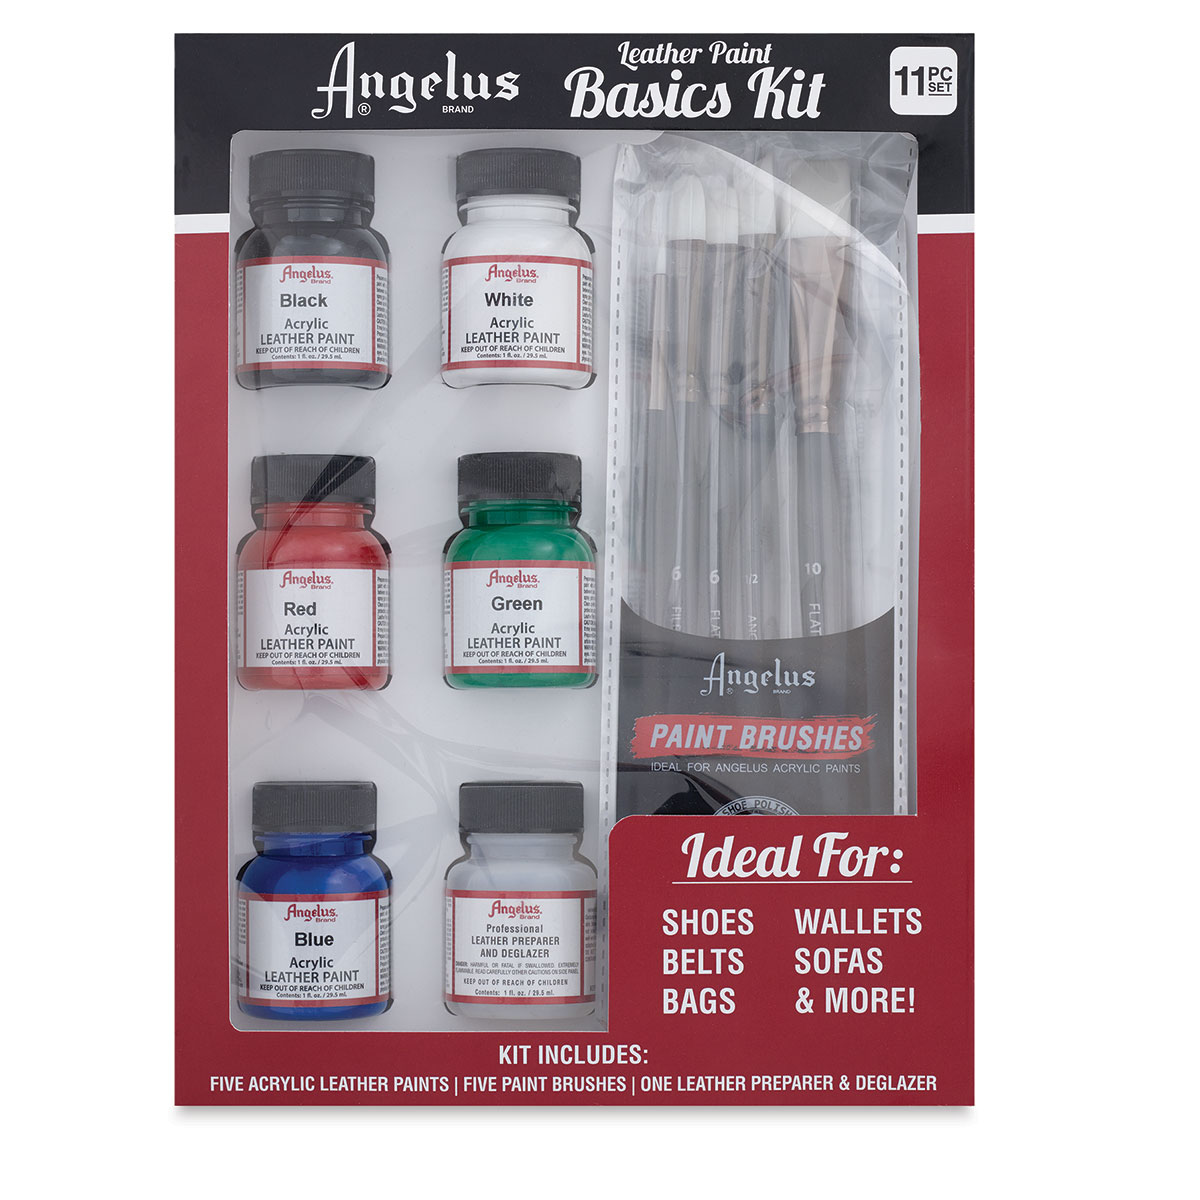 Angelus Leather Paint - Basic Kit 